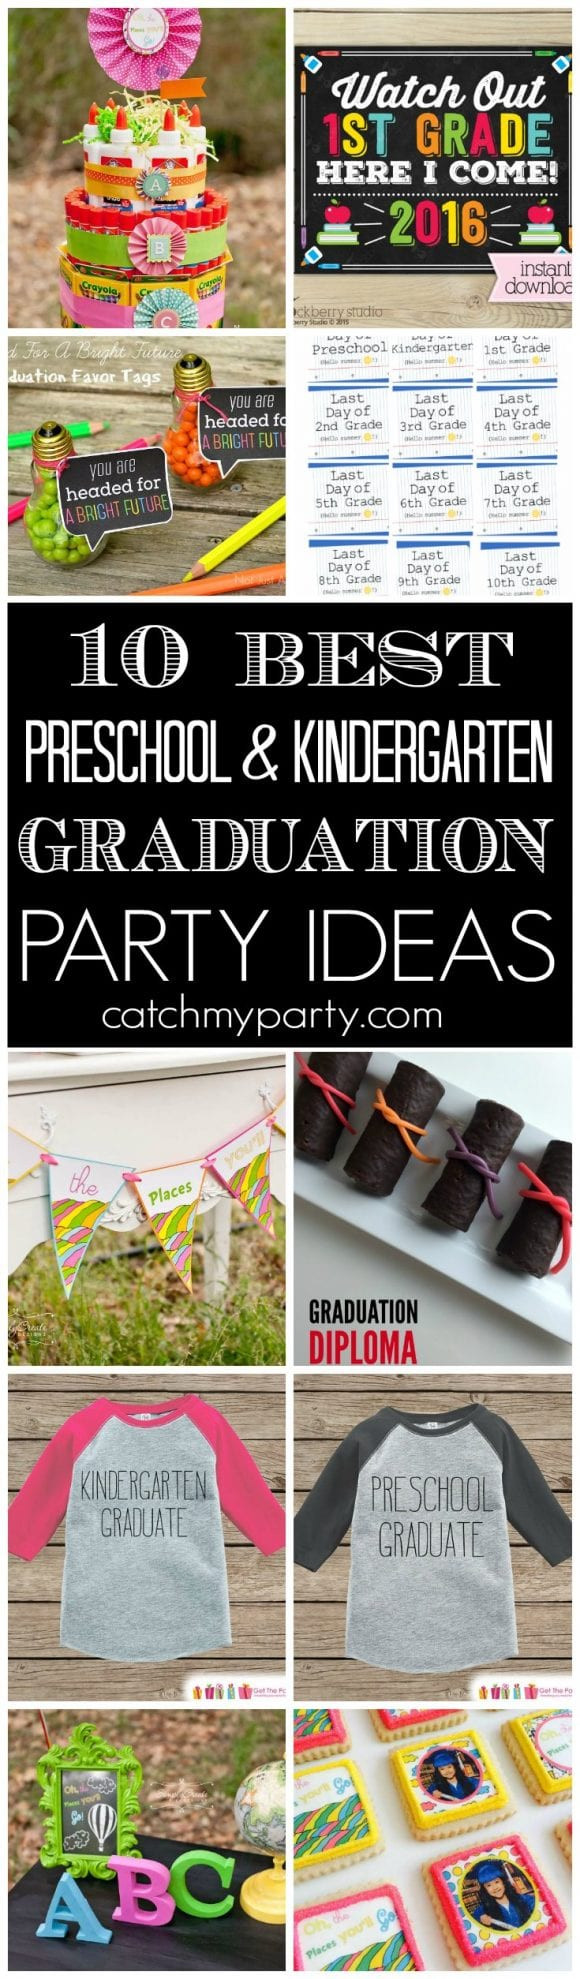 Preschool Graduation Gift Ideas
 10 Best Preschool & Kindergarten Graduation Party Ideas